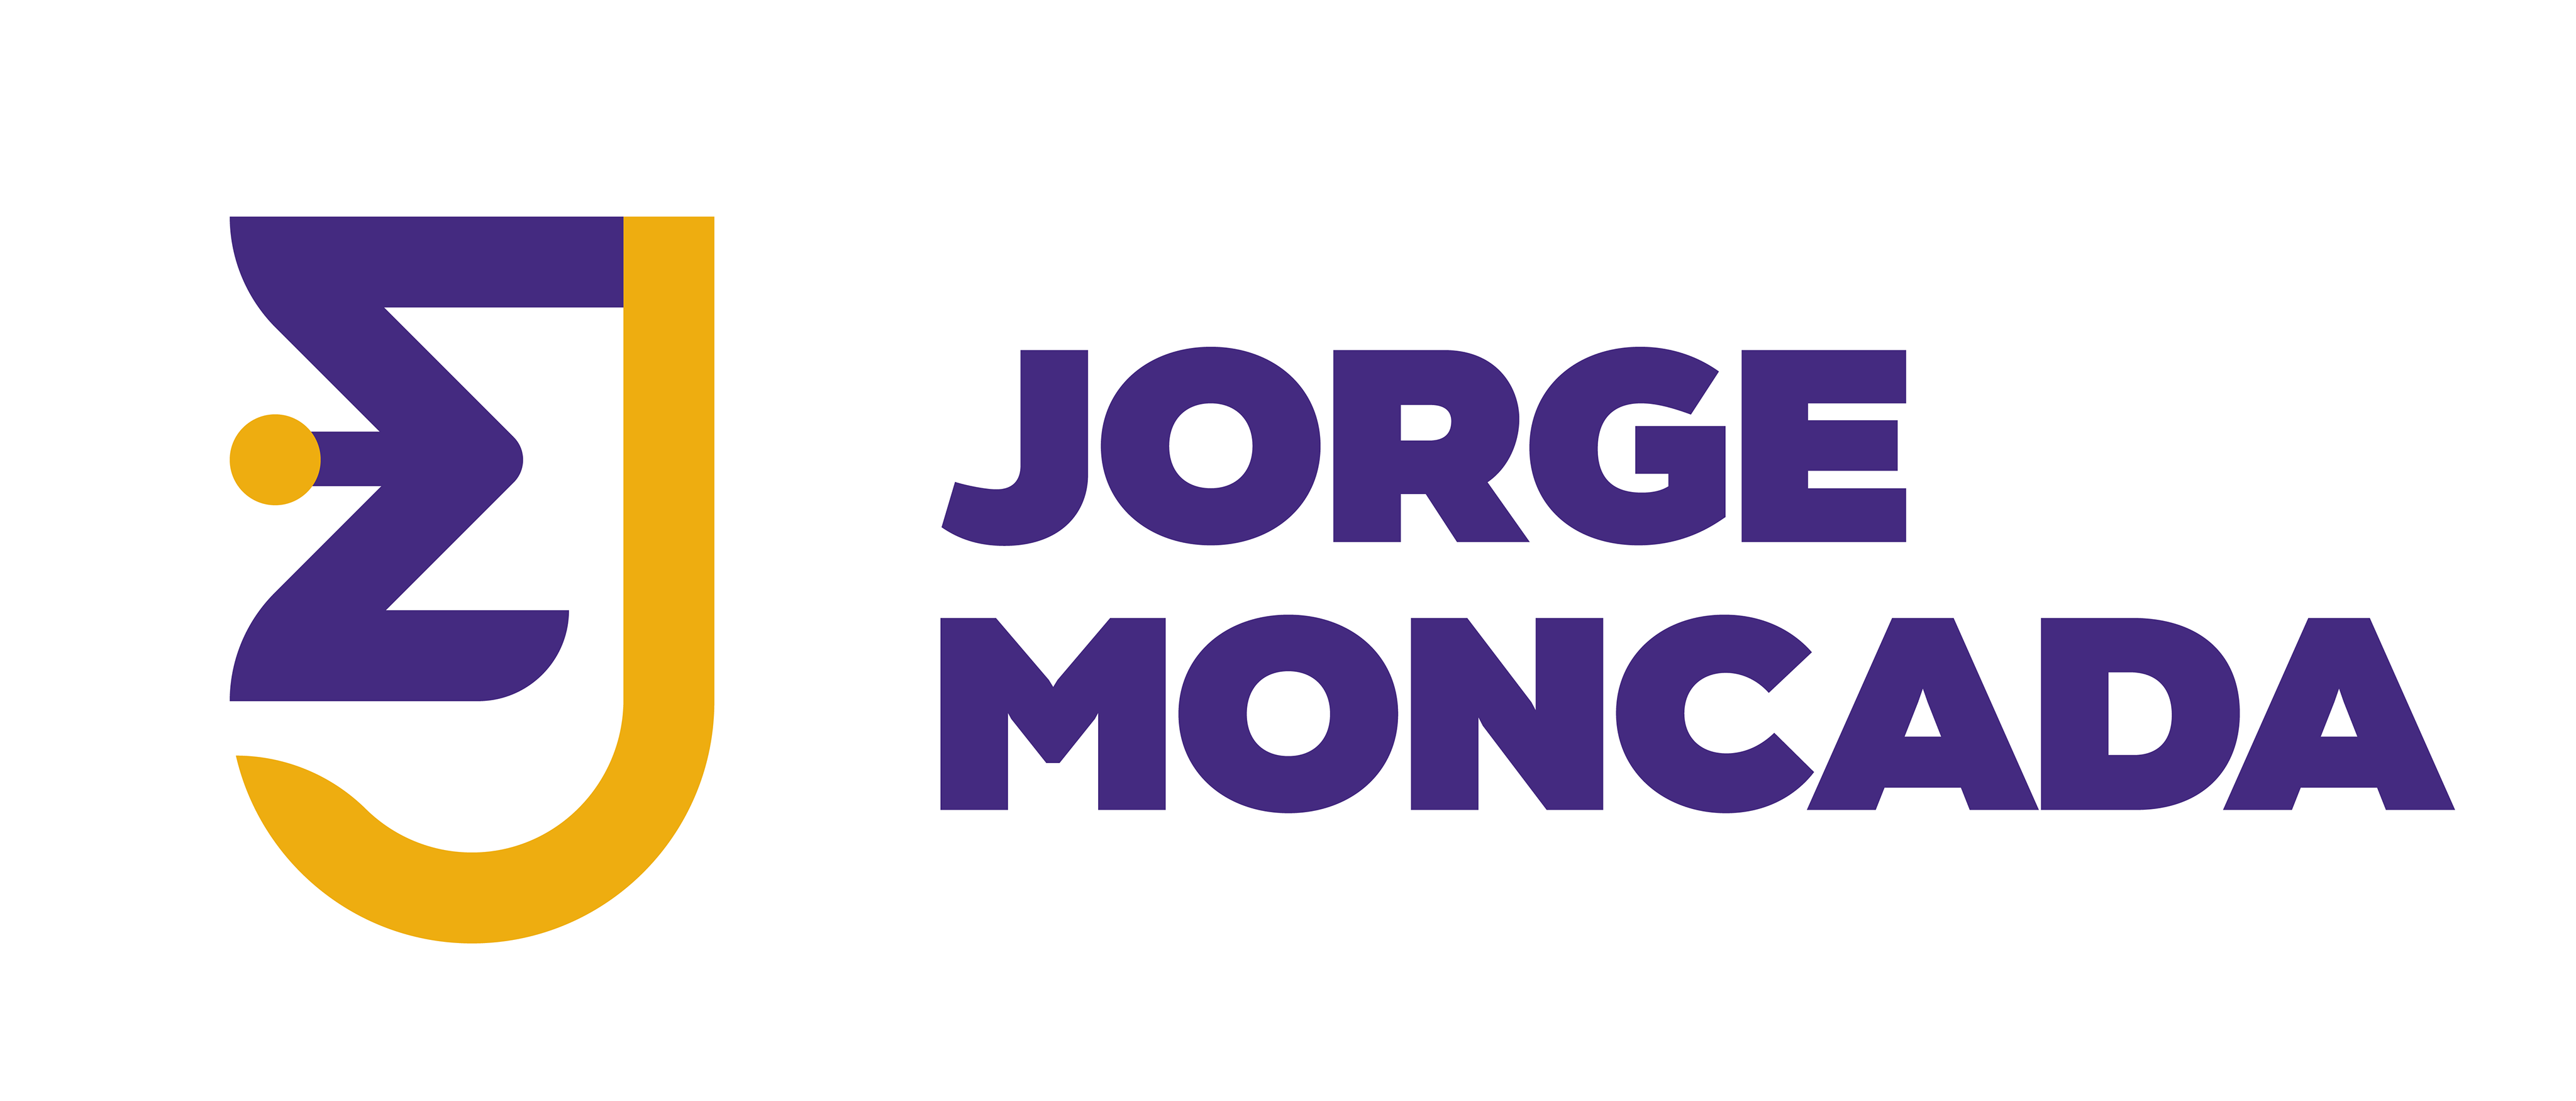 Jorge Isai Moncada Reyes